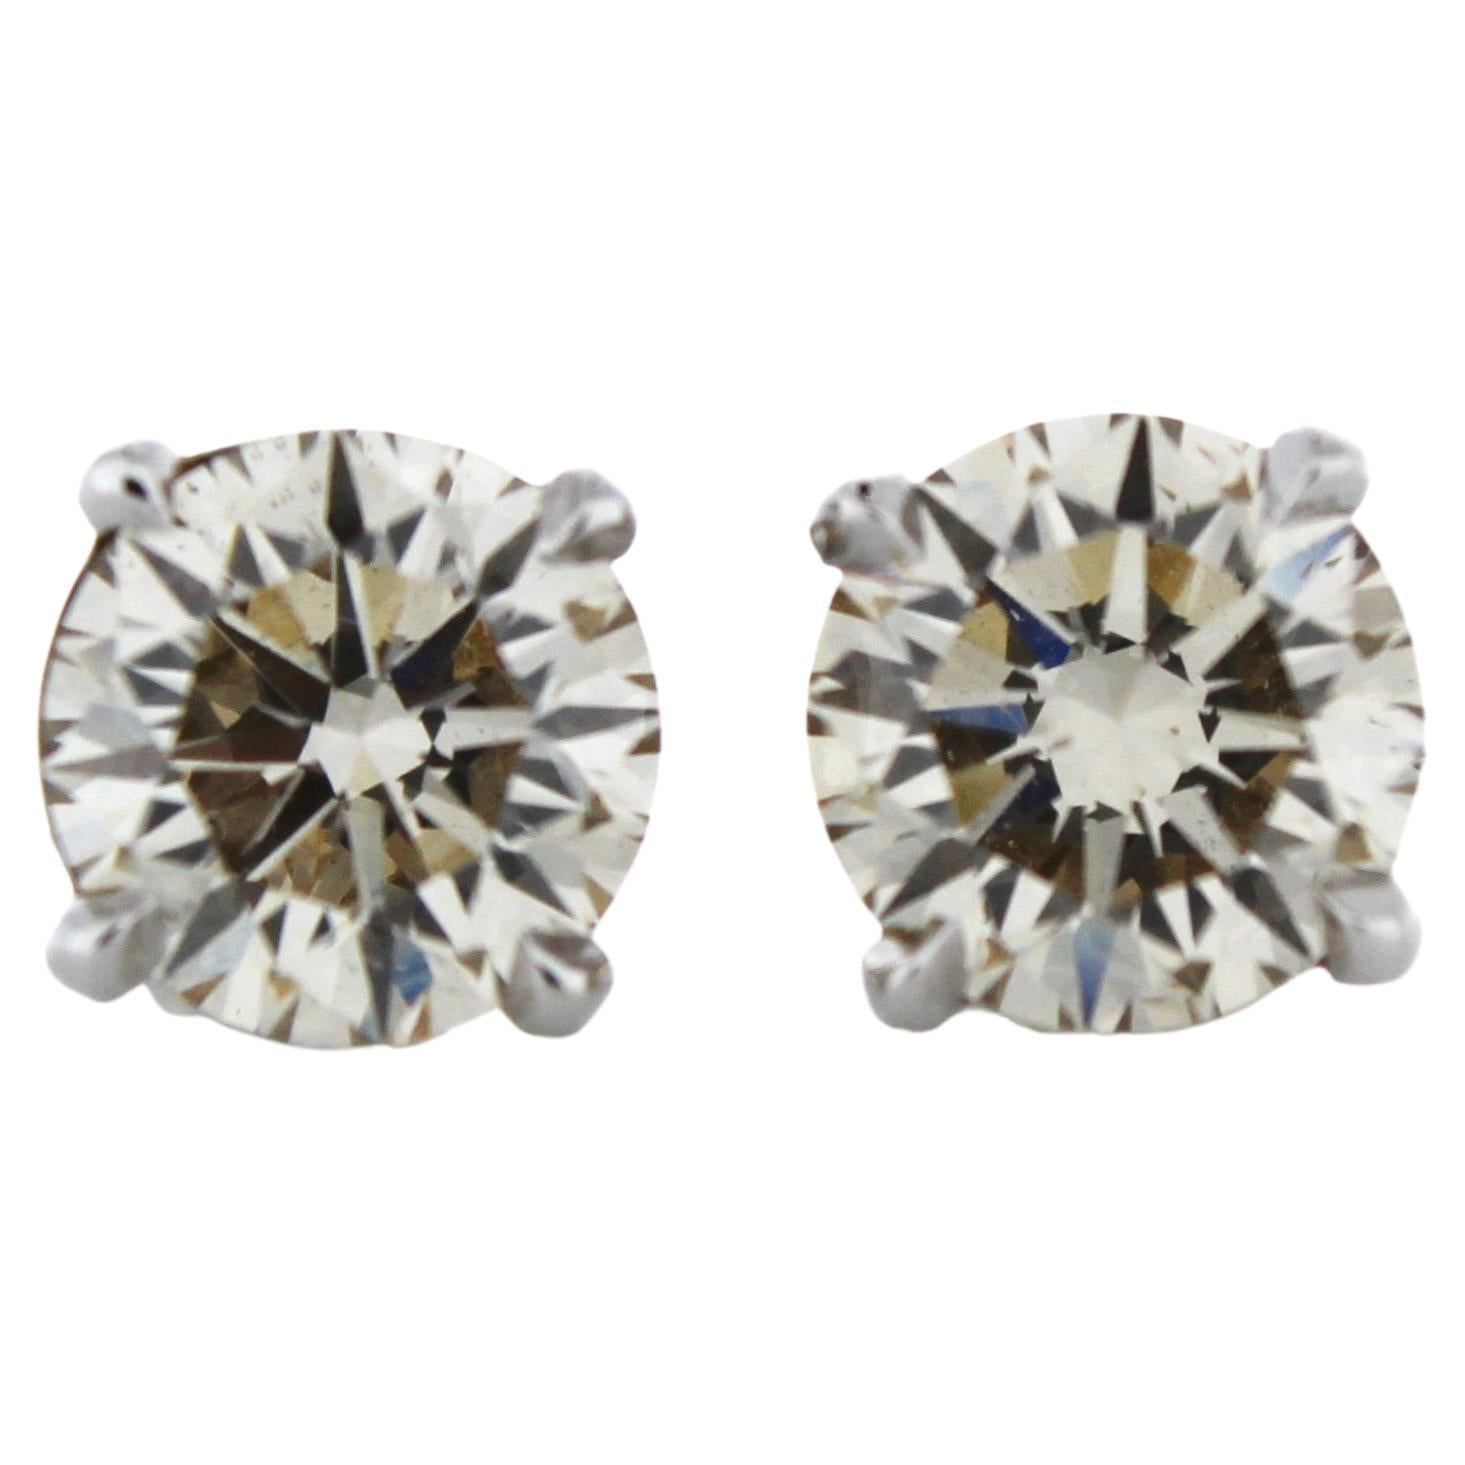 3.58 Carat Total Diamond Stud Earrings in 14 Karat White Gold